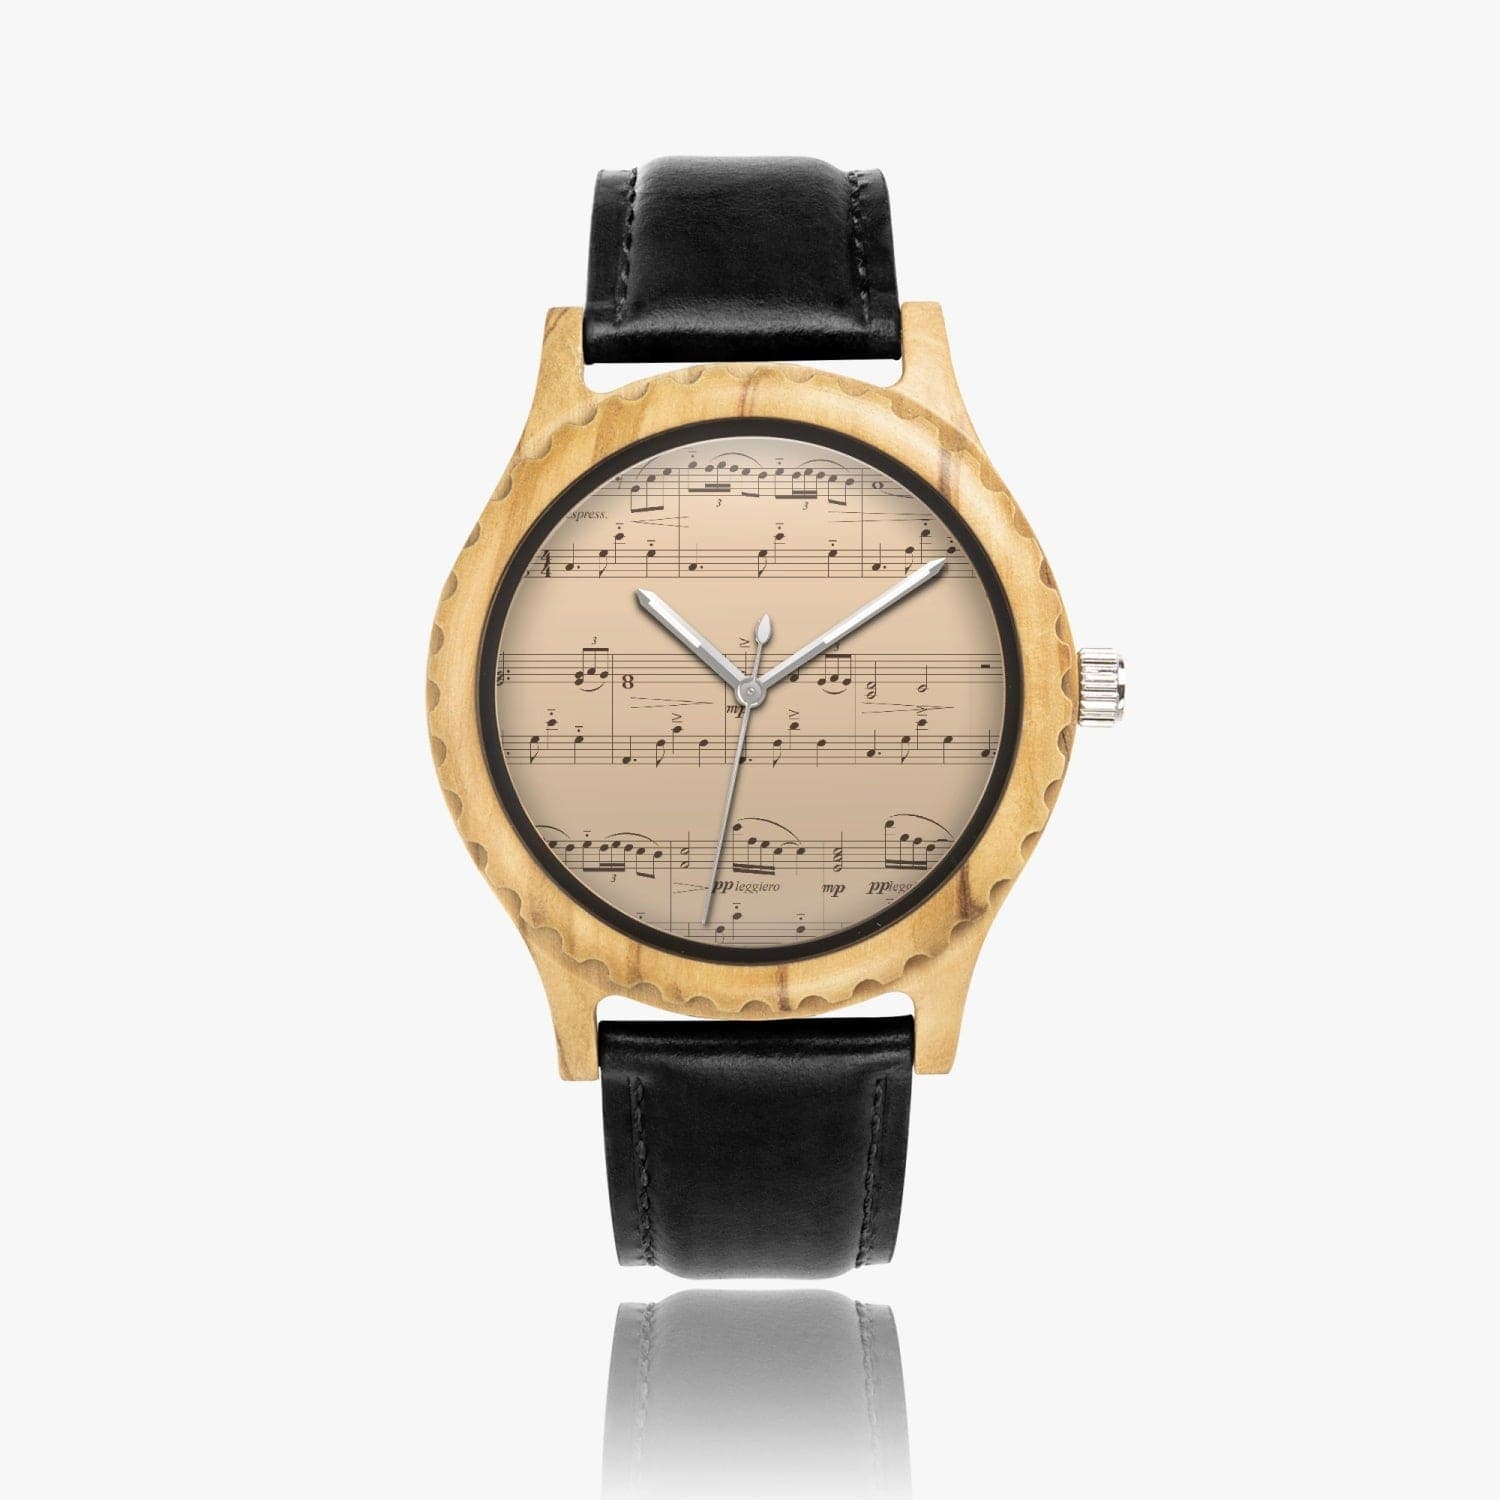 Tango music. Italian Olive Lumber Wooden Watch - Leather Strap. Designer watch by Ingrid Hütten